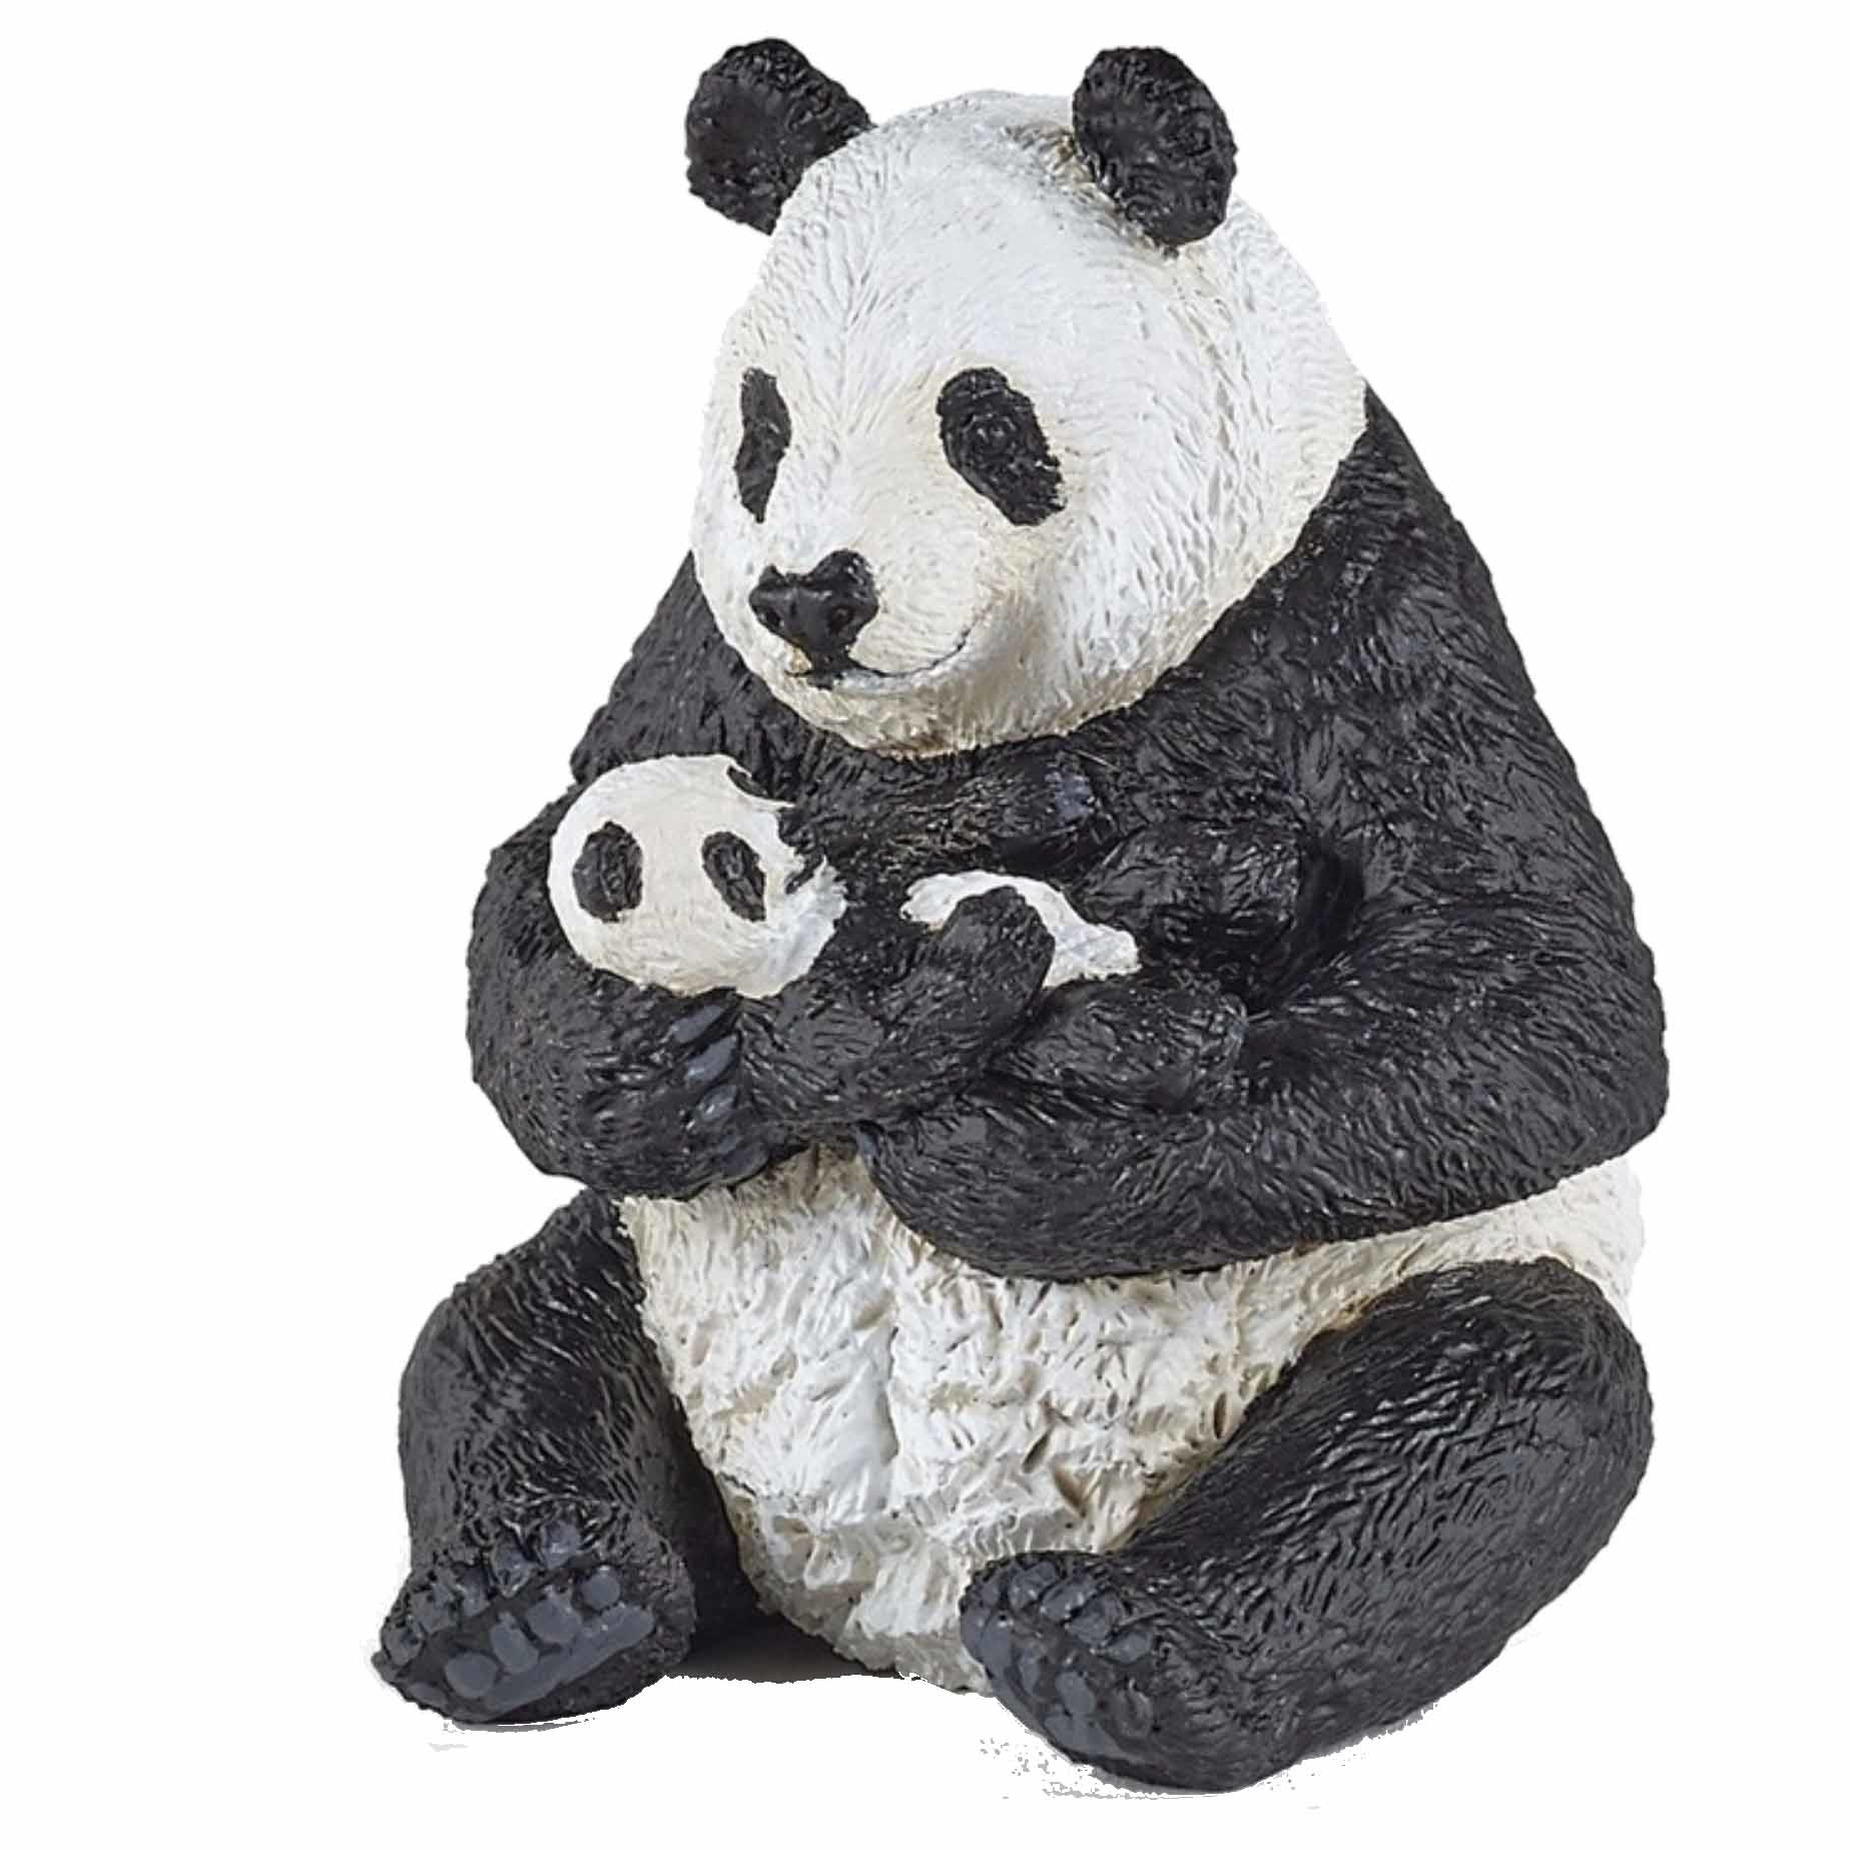 Plastic speelgoed figuur panda met baby panda 8 cm